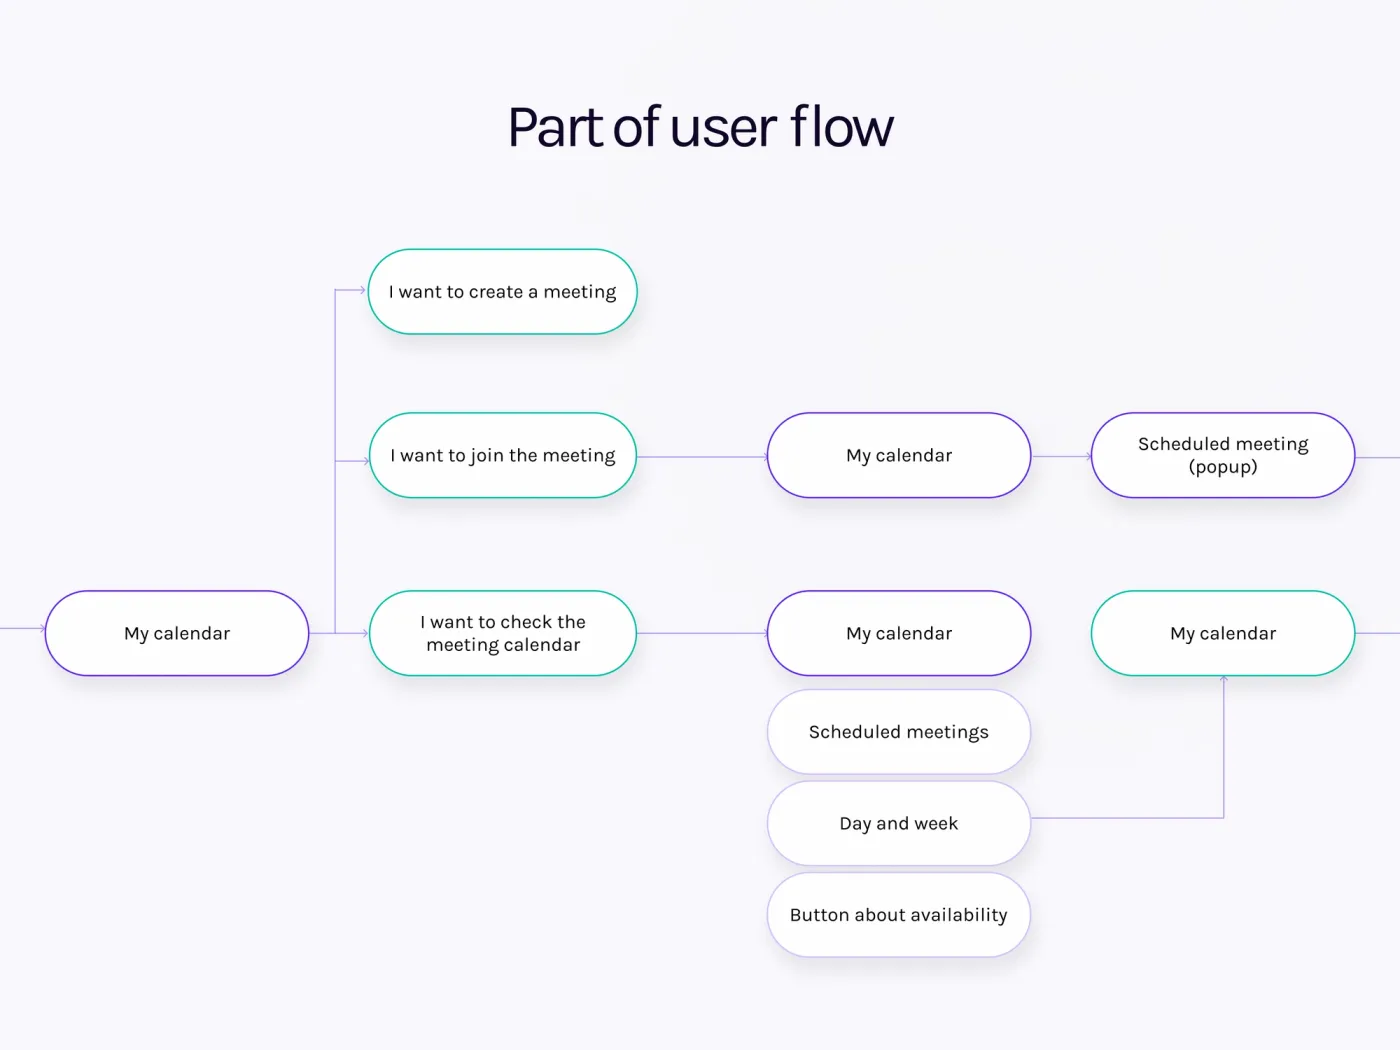 Part of Virtual Branch user flow